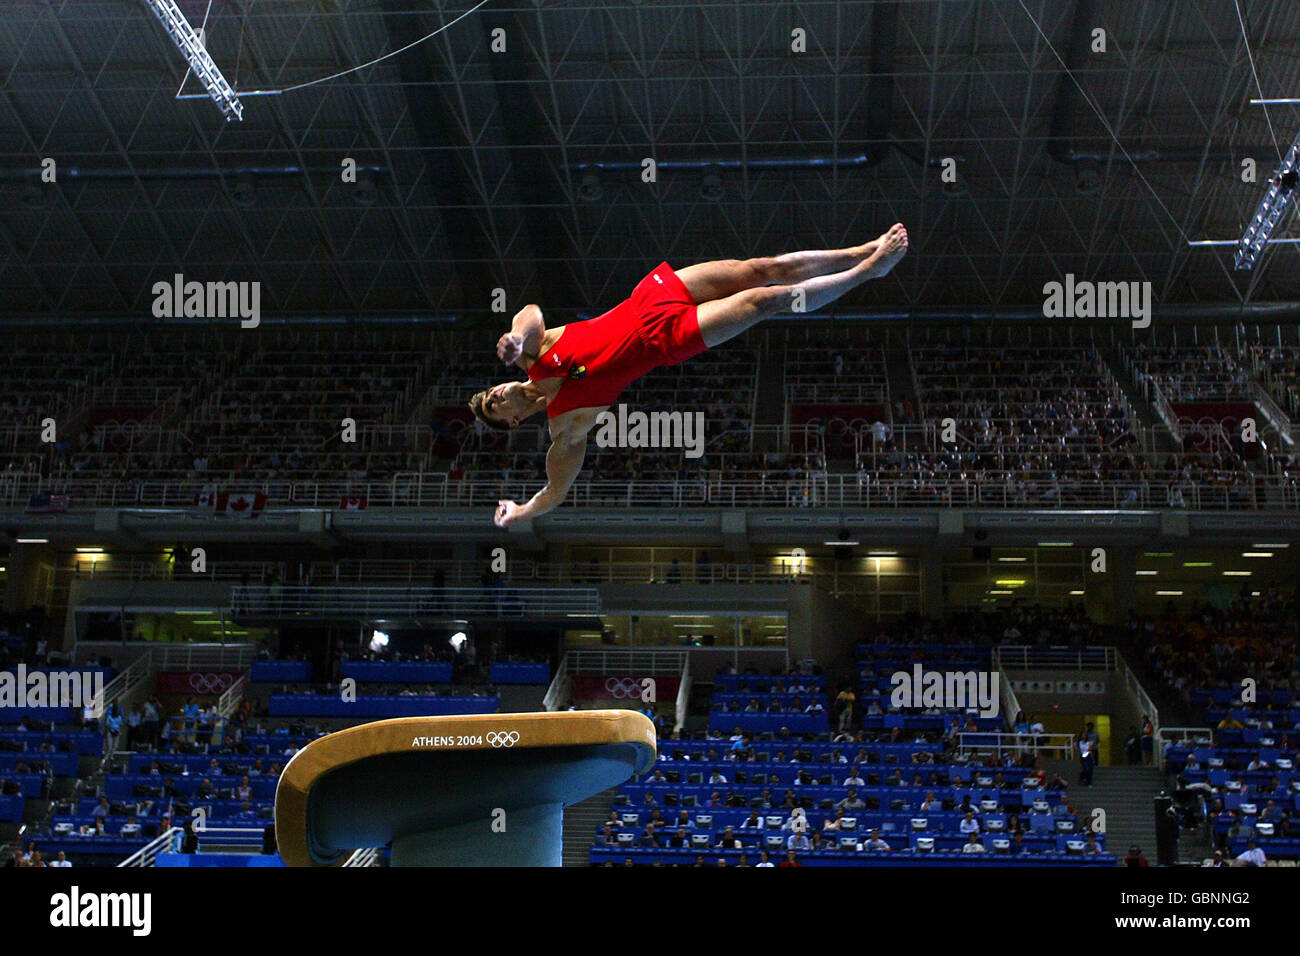 Gymnastics - Athens Olympic Games 2004 - Apparatus Finals Stock Photo